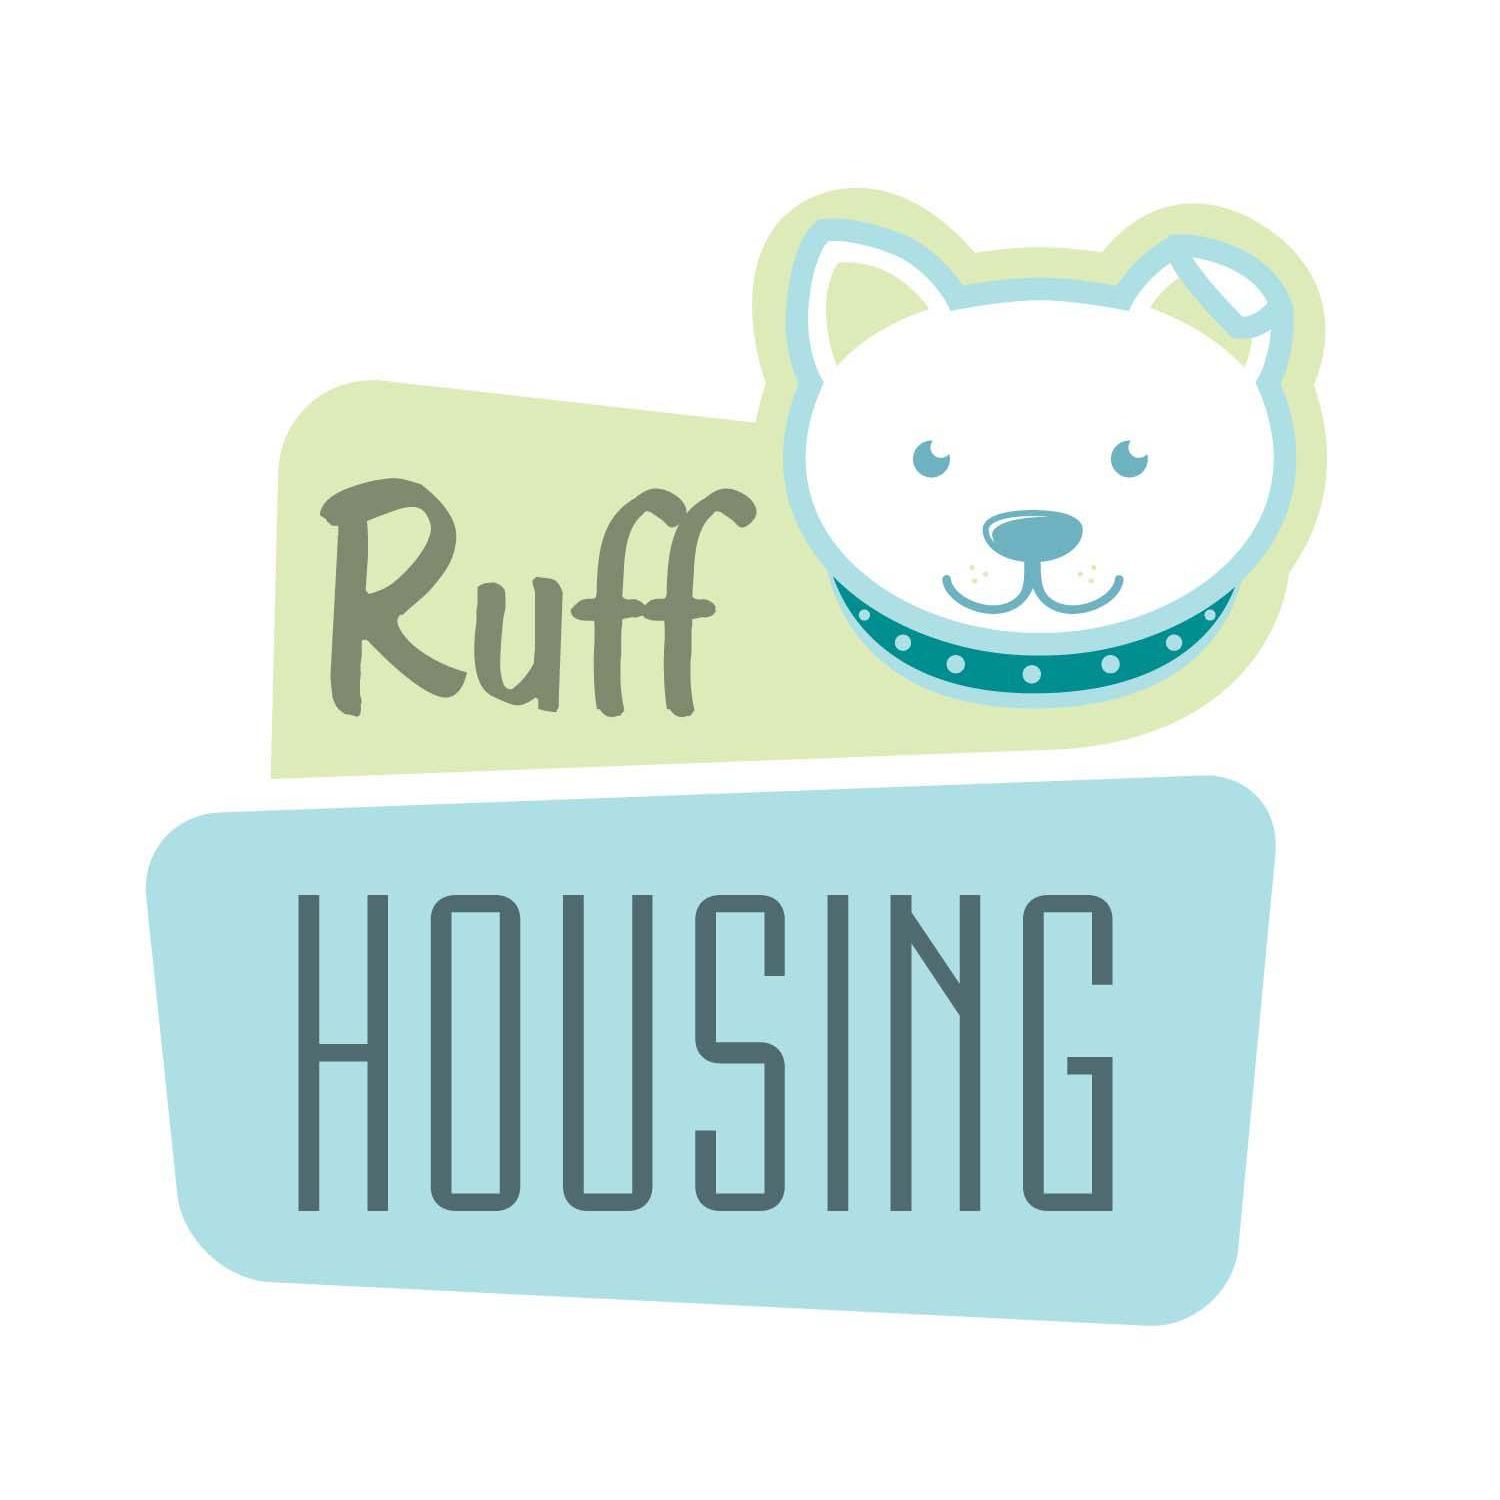 Ruff Housing Witt Street